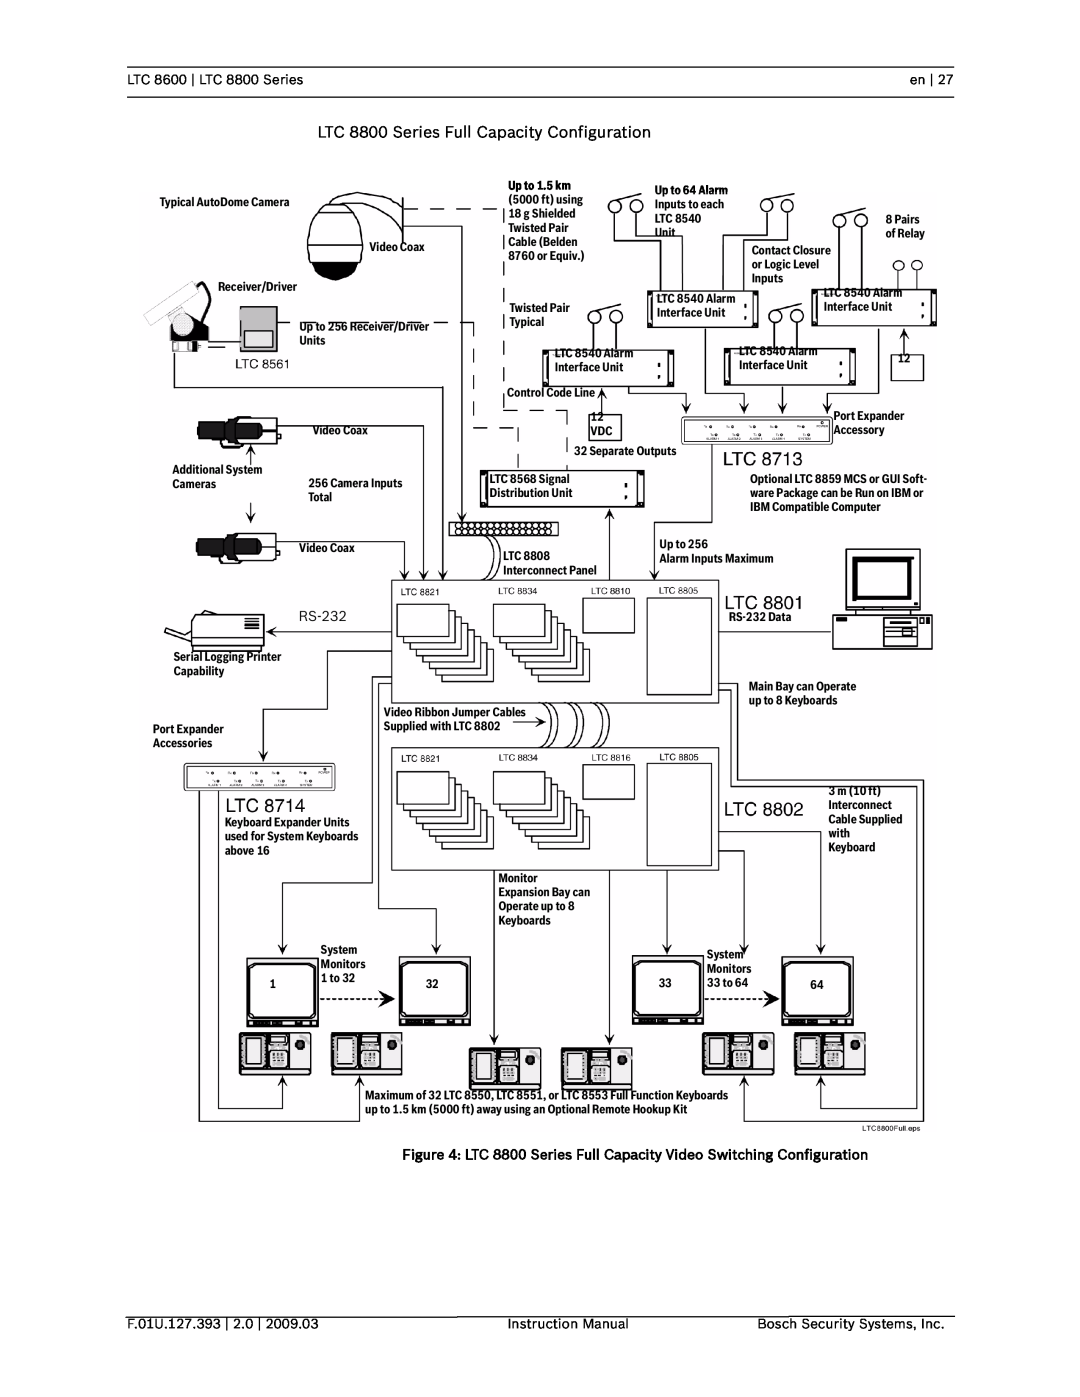 Bosch Appliances LTC 8600 LTC 8800 Series Full Capacity Configuration, RS-232, F.01U.127.393 | 2.0, Instruction Manual 